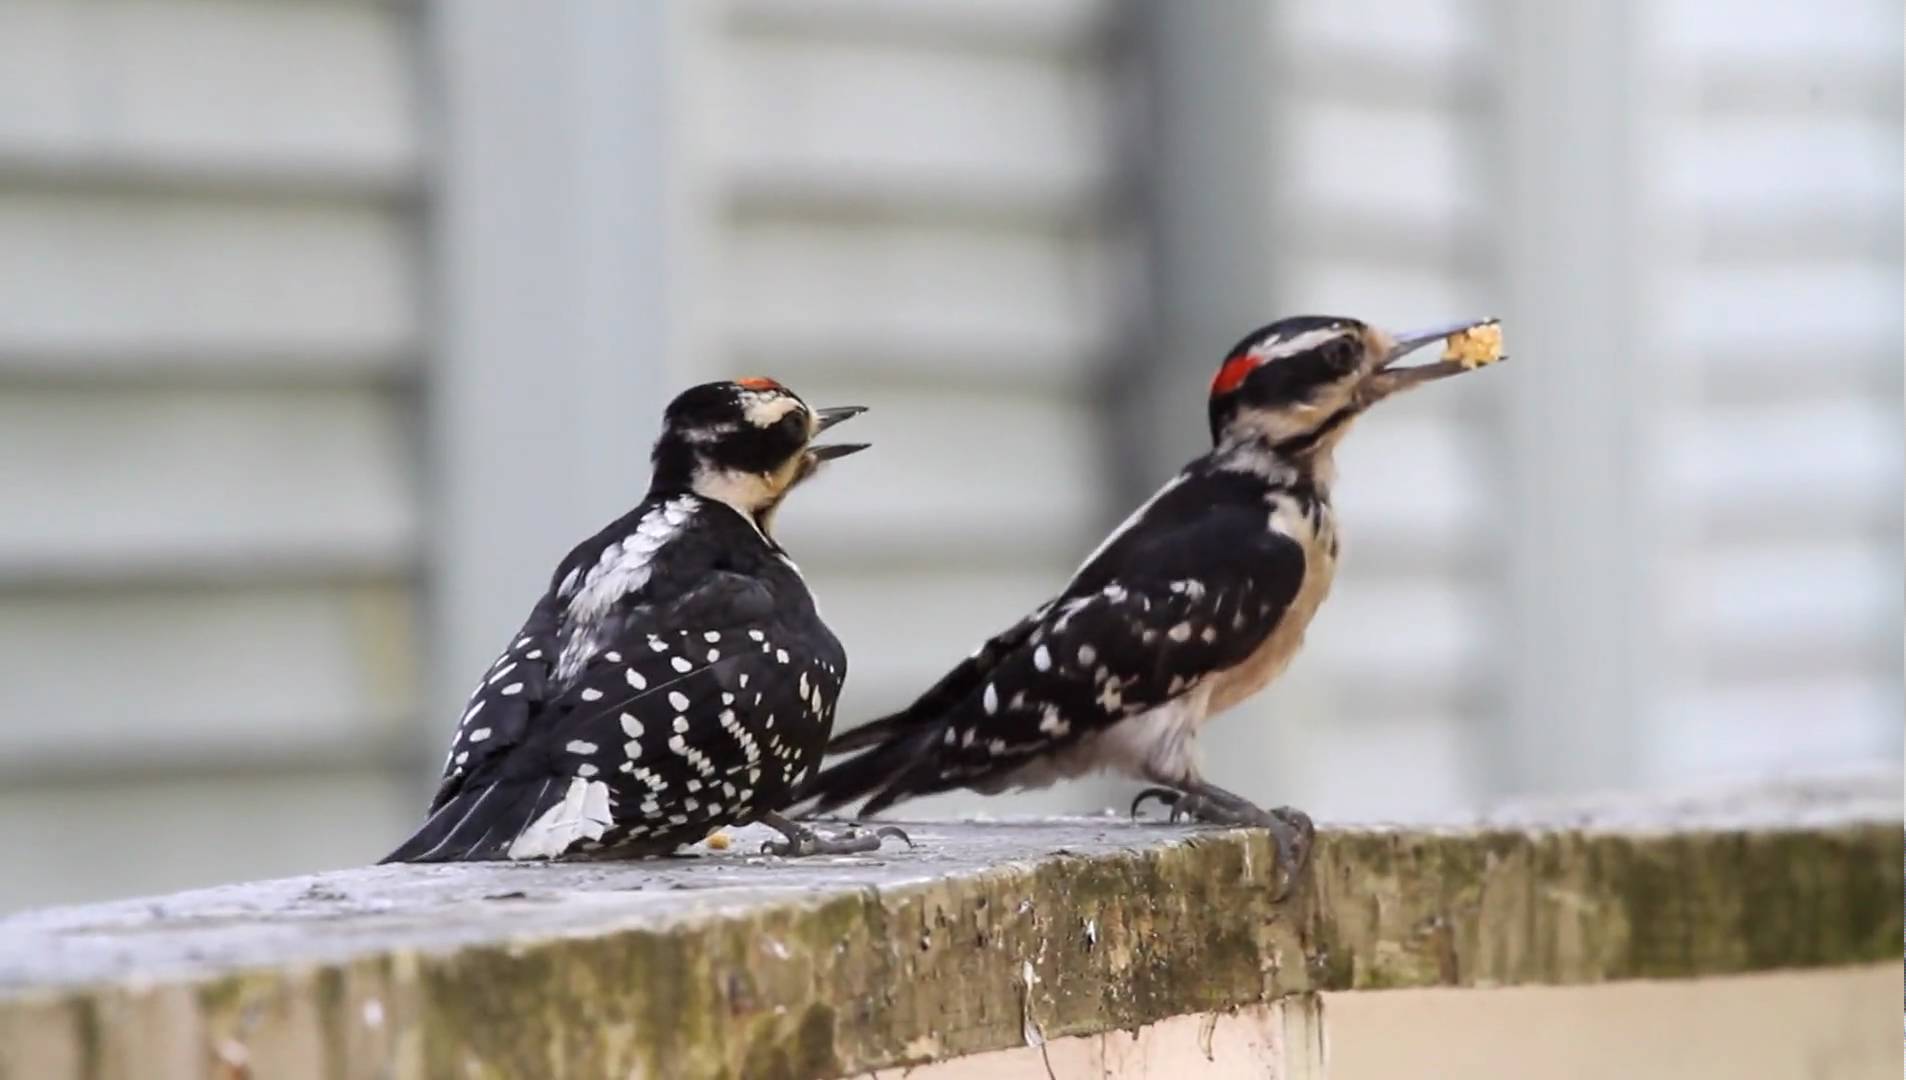 Adult Male Hairy Woodpecker Feeding Juvenile - YouTube